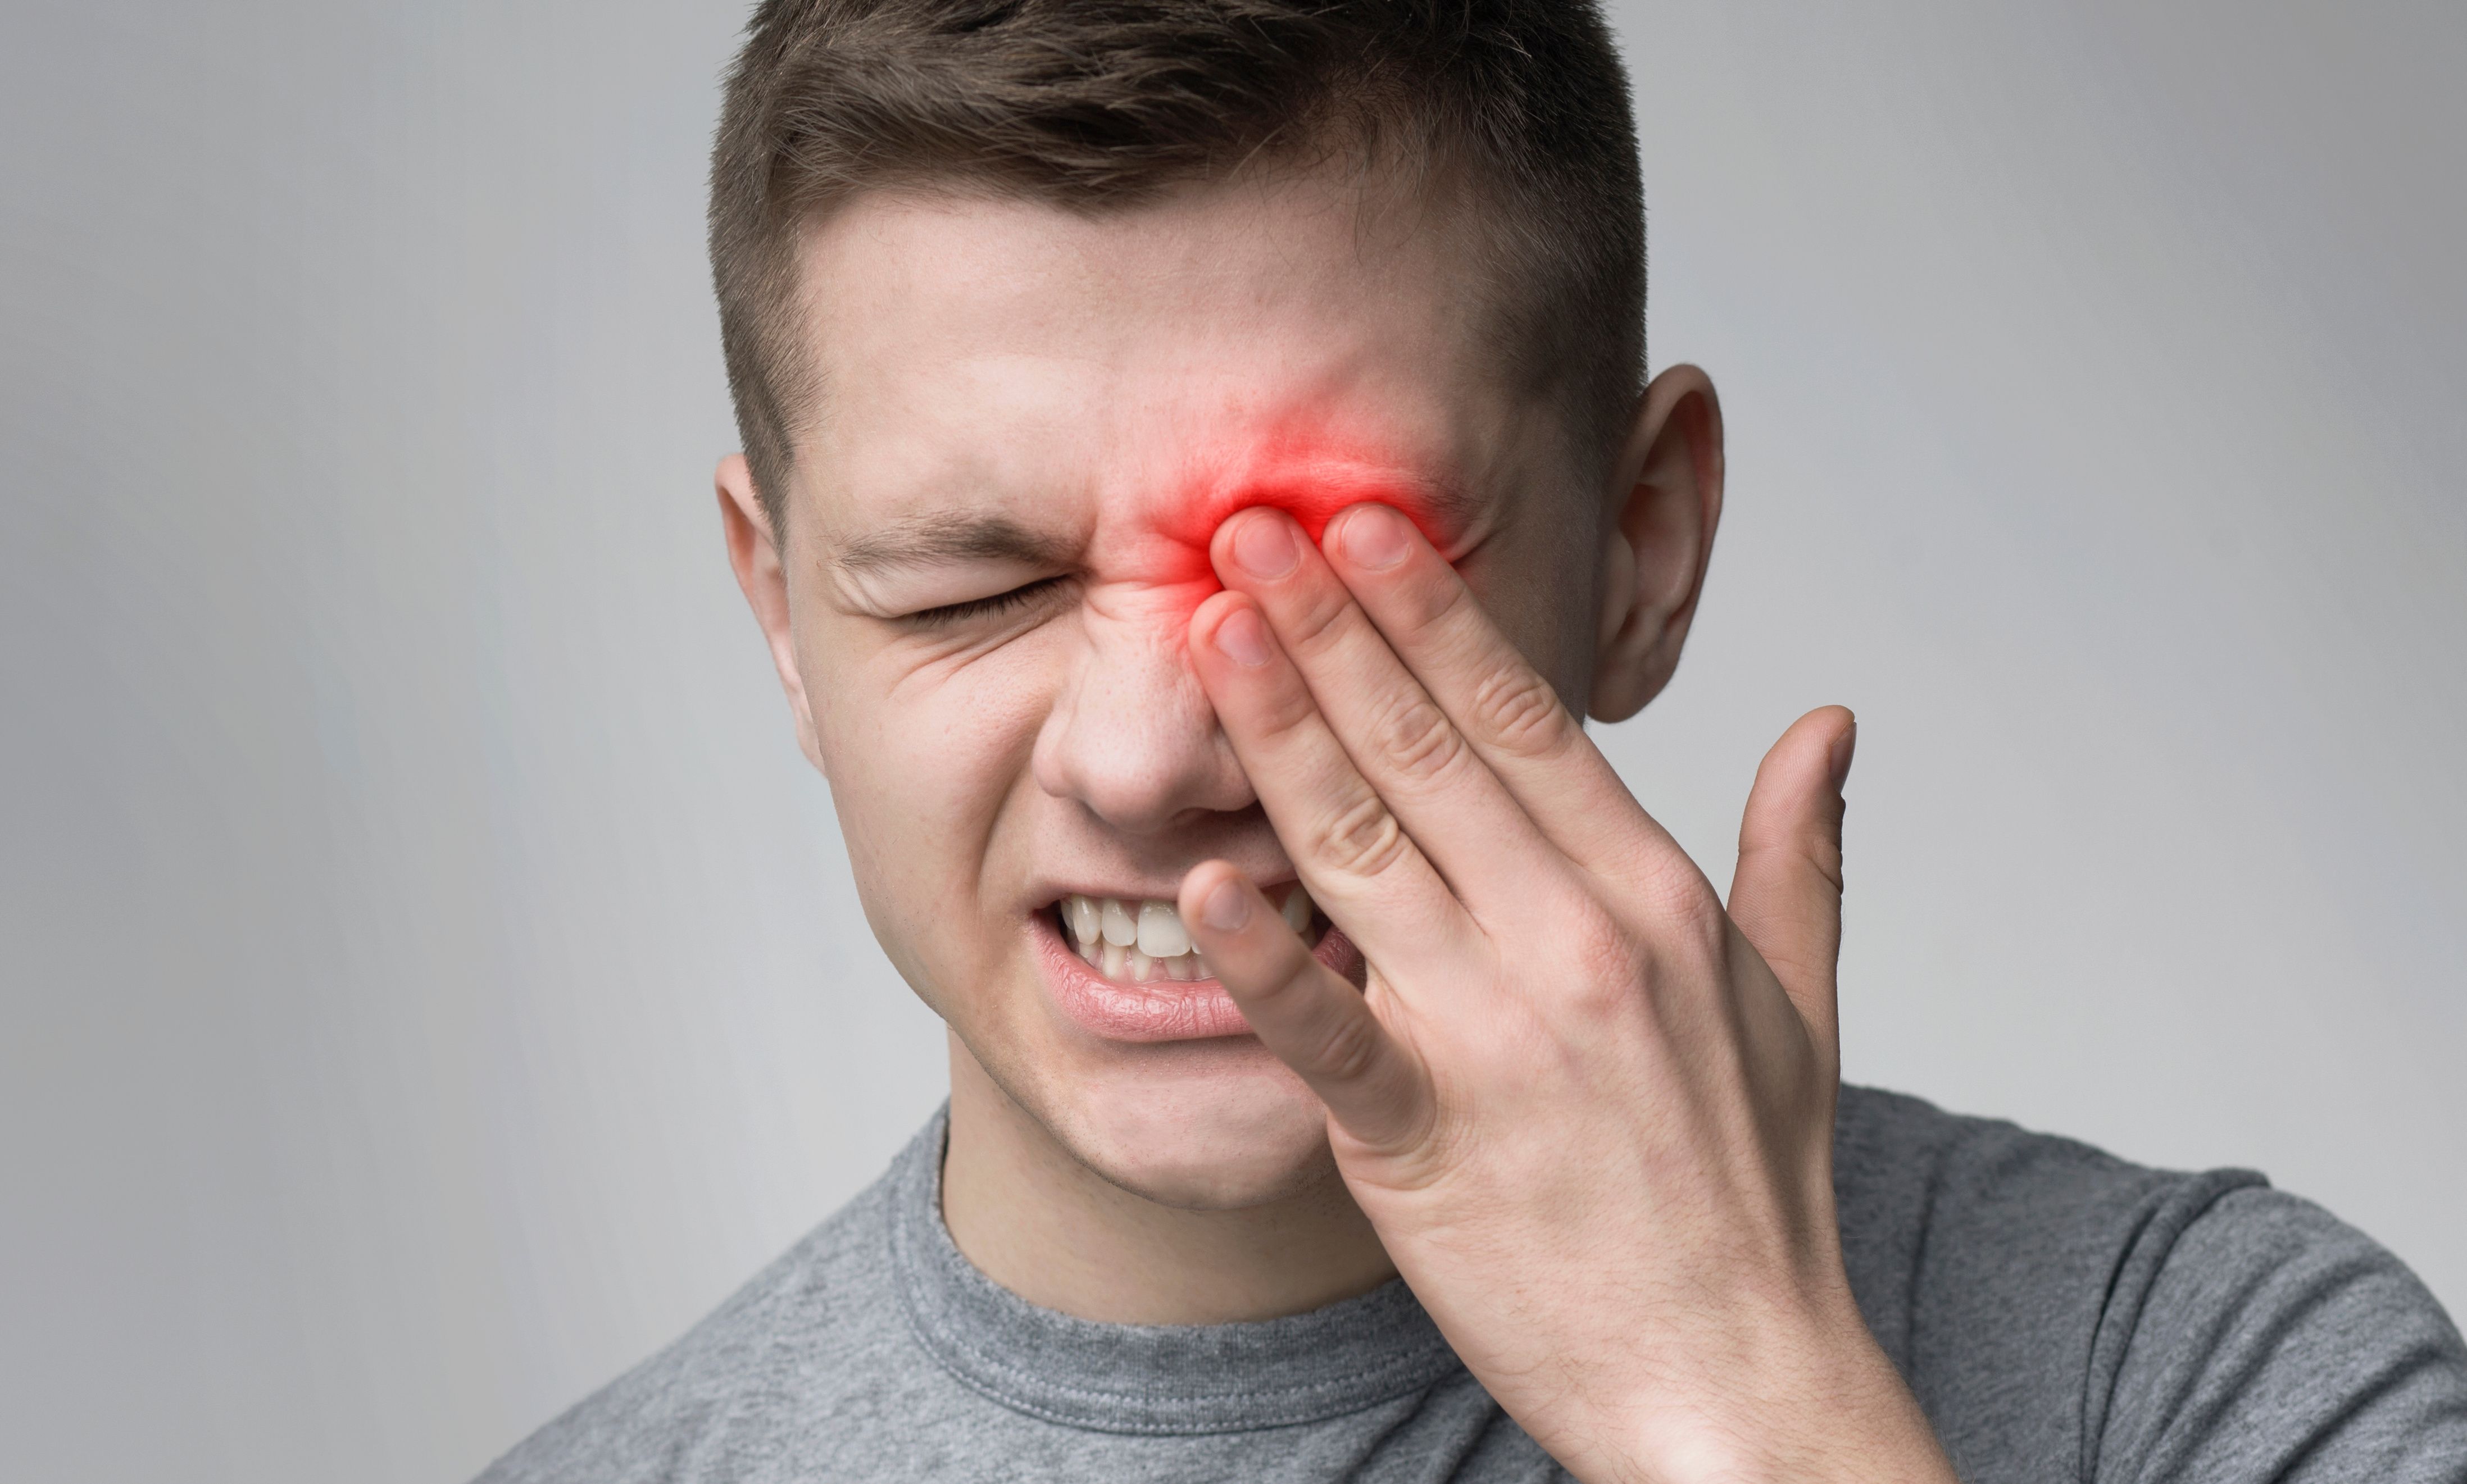 Man affected by eye pain | Image credit: Prostock-studio - stock.adobe.com